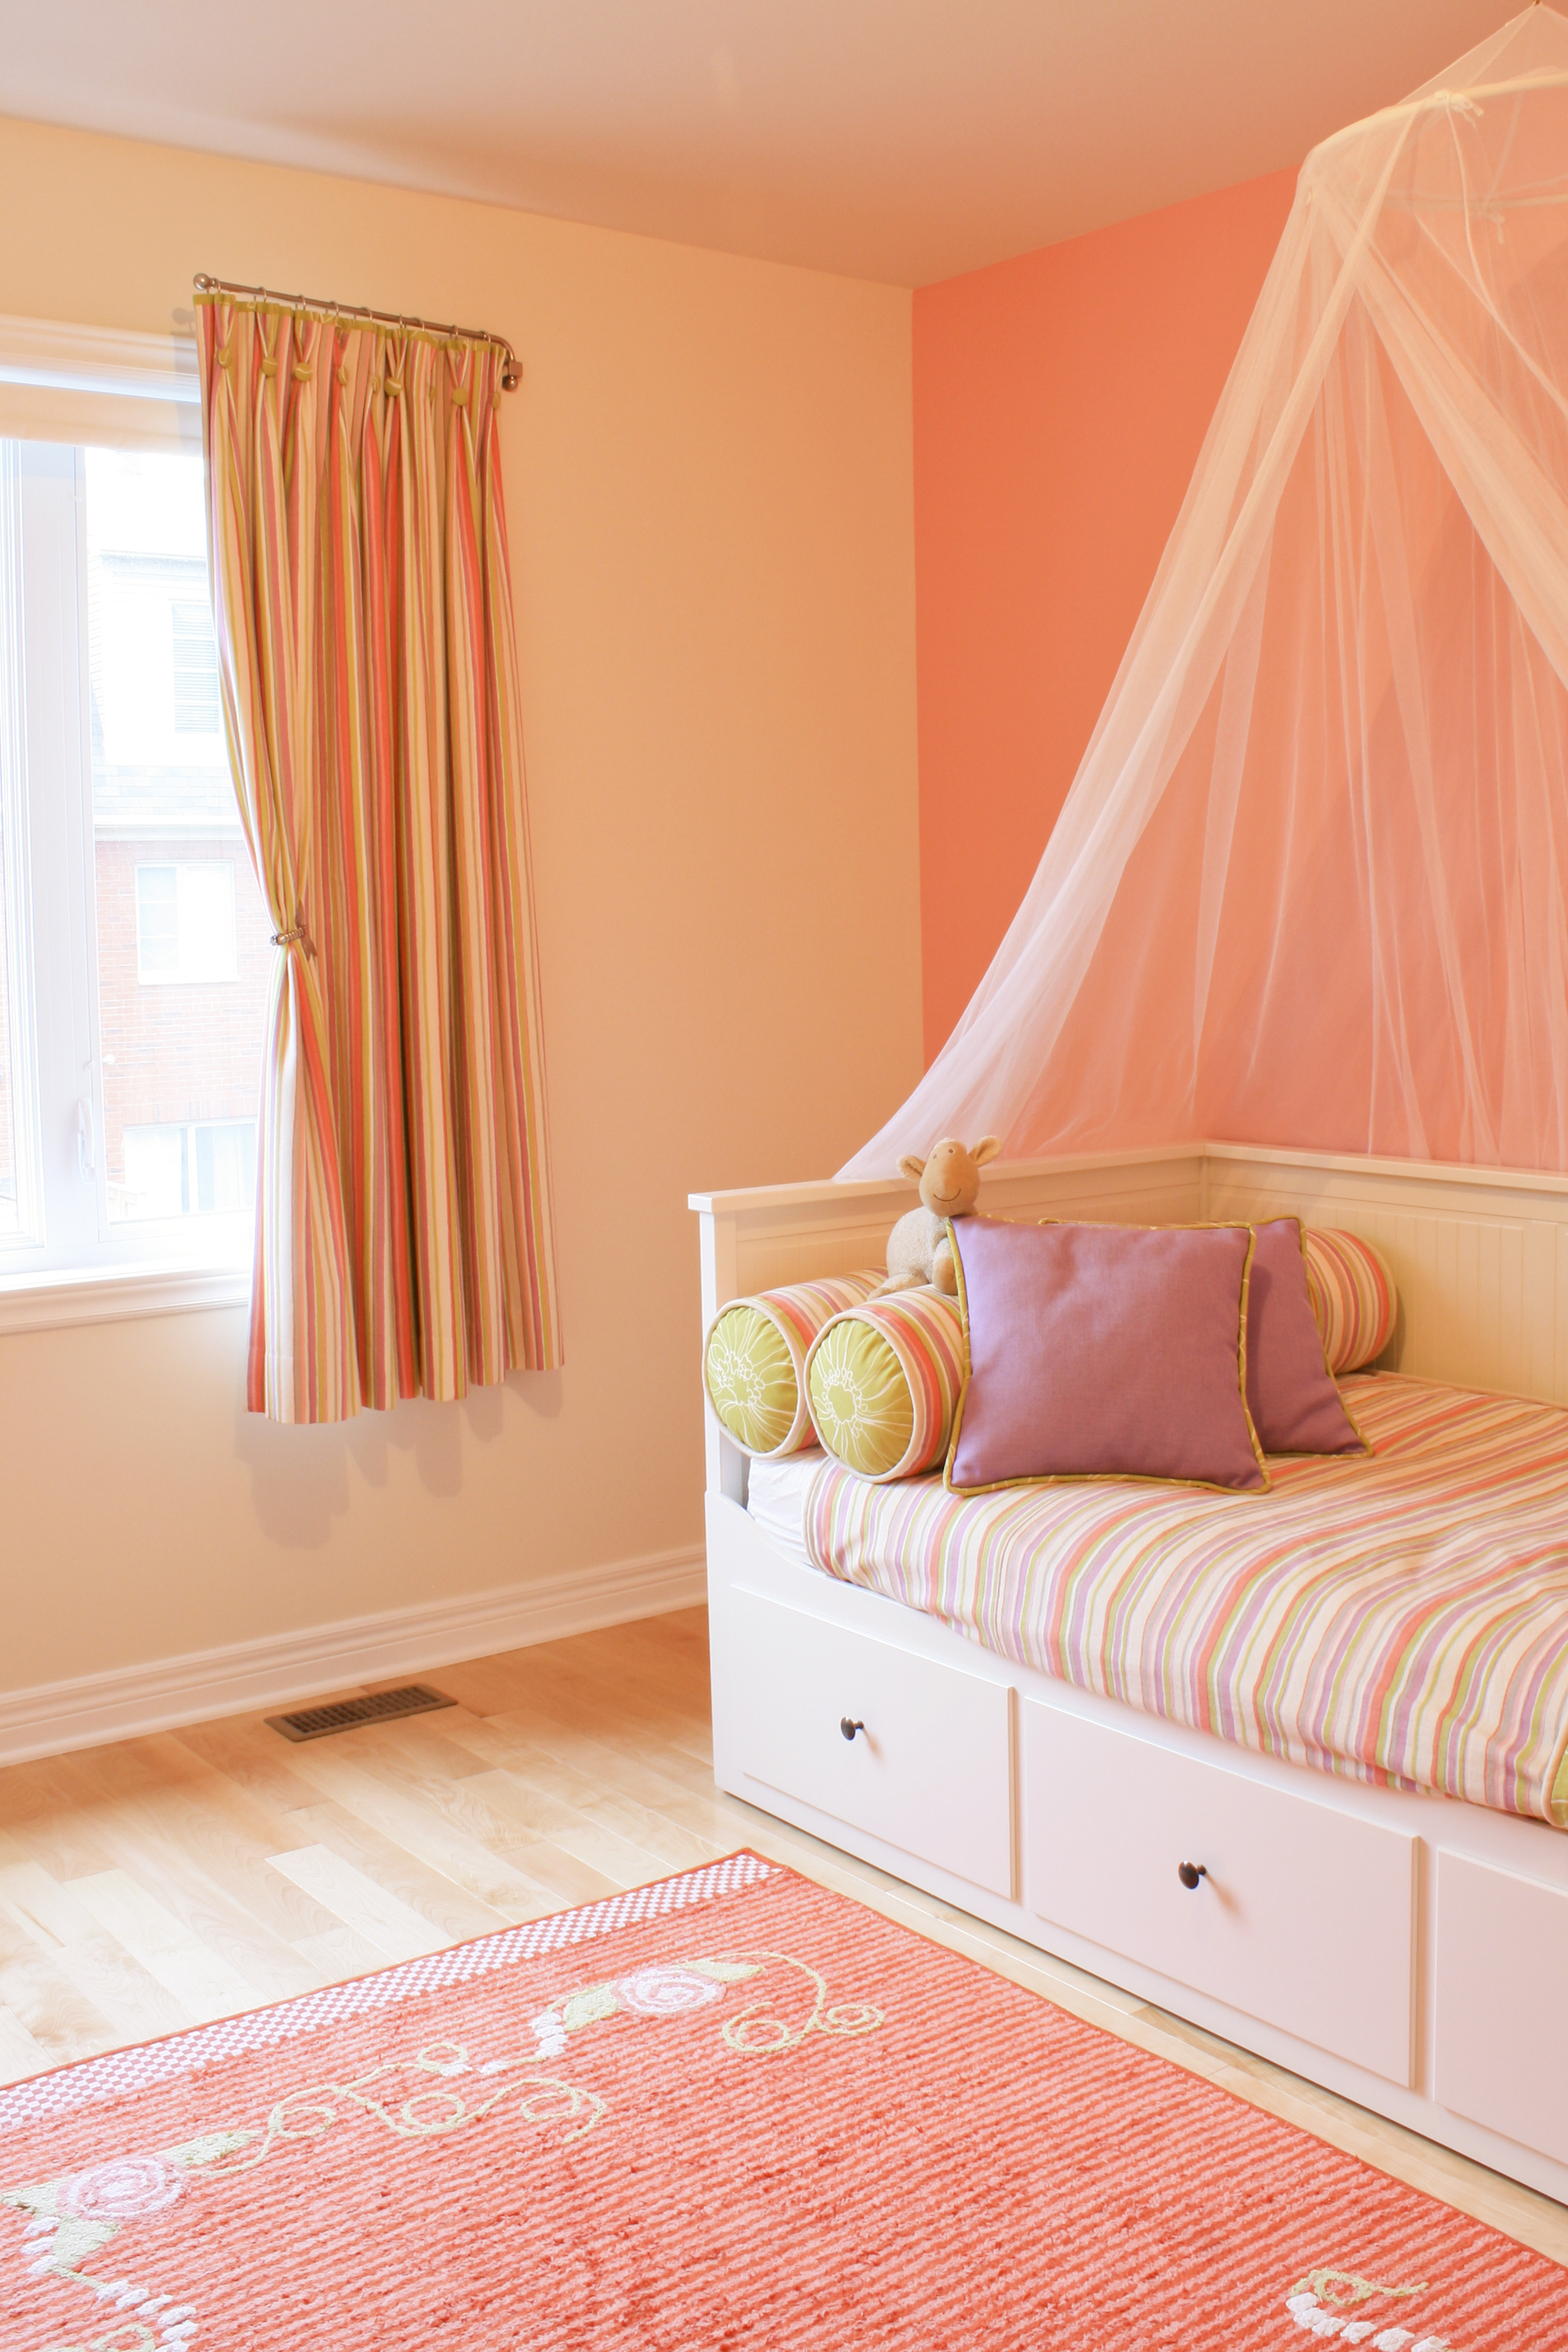 Персиковая детская комната